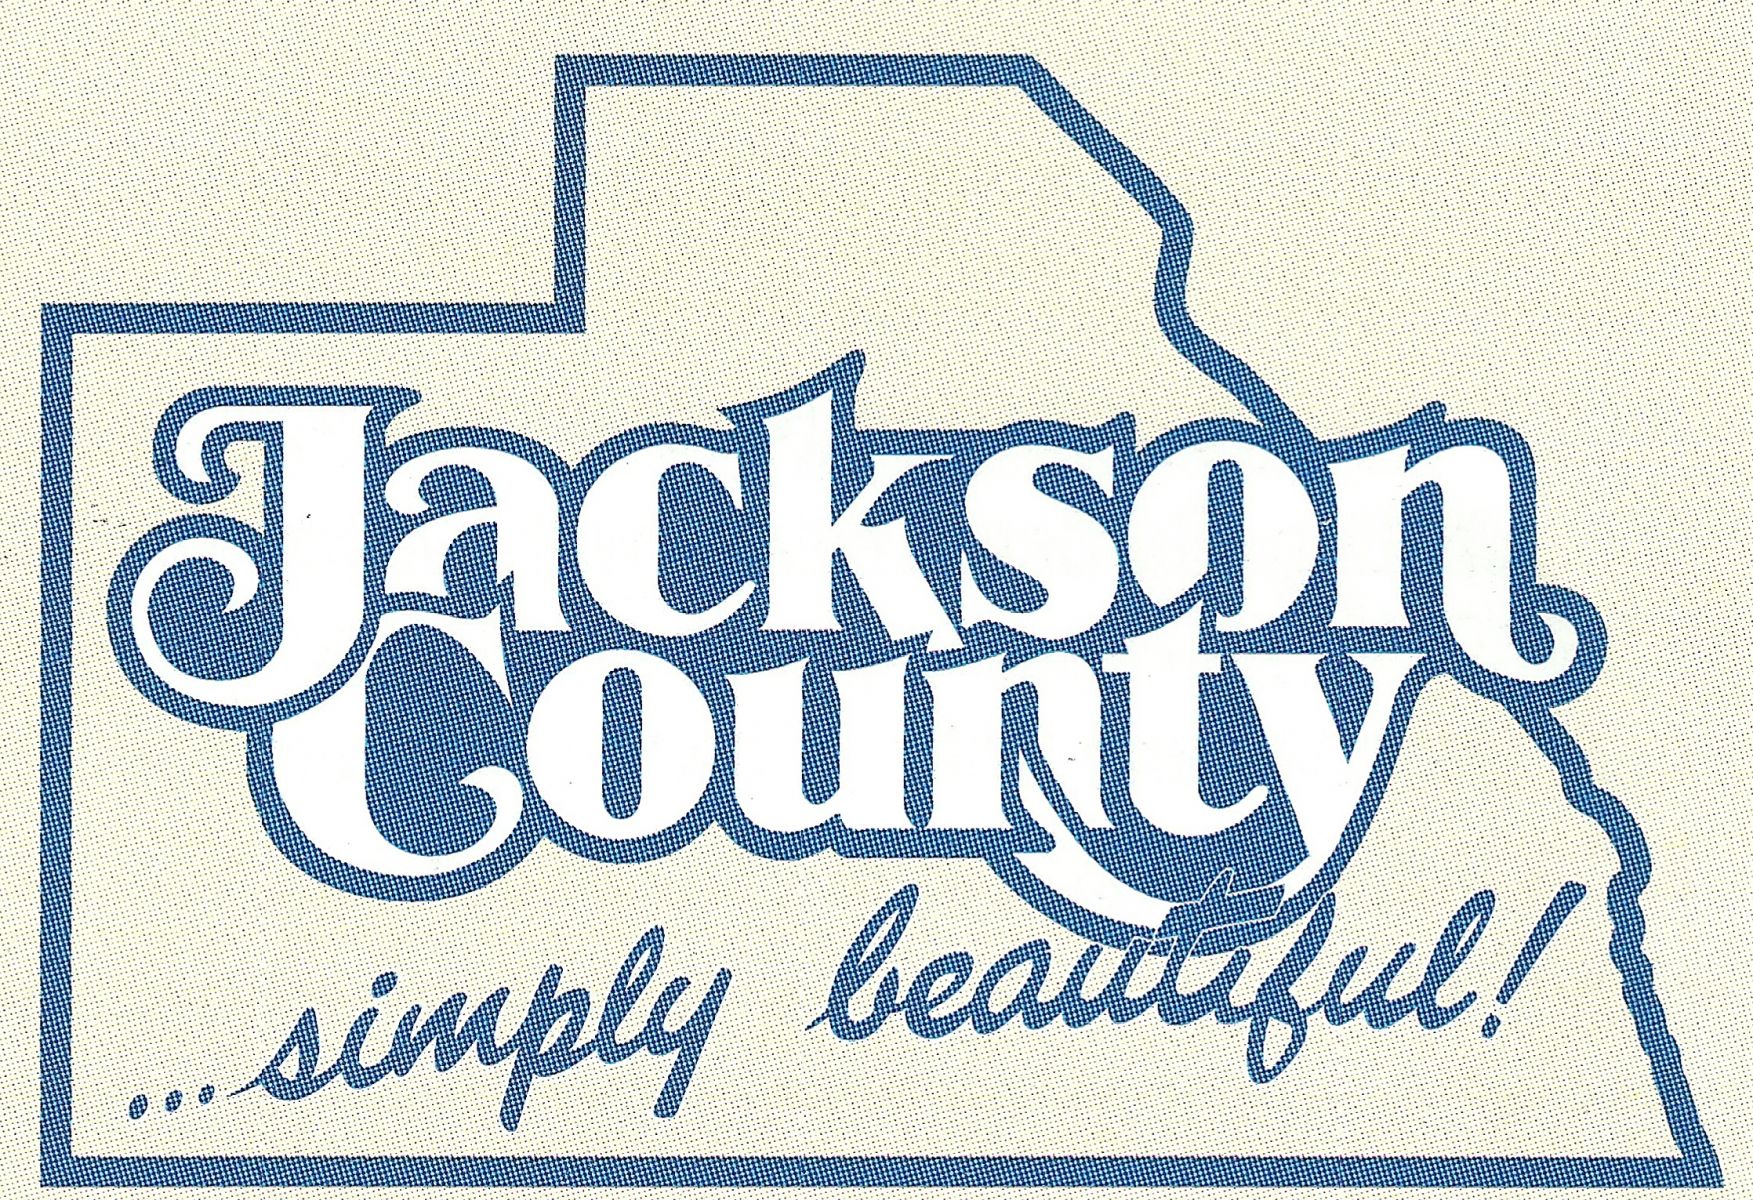 Jackson County's Image